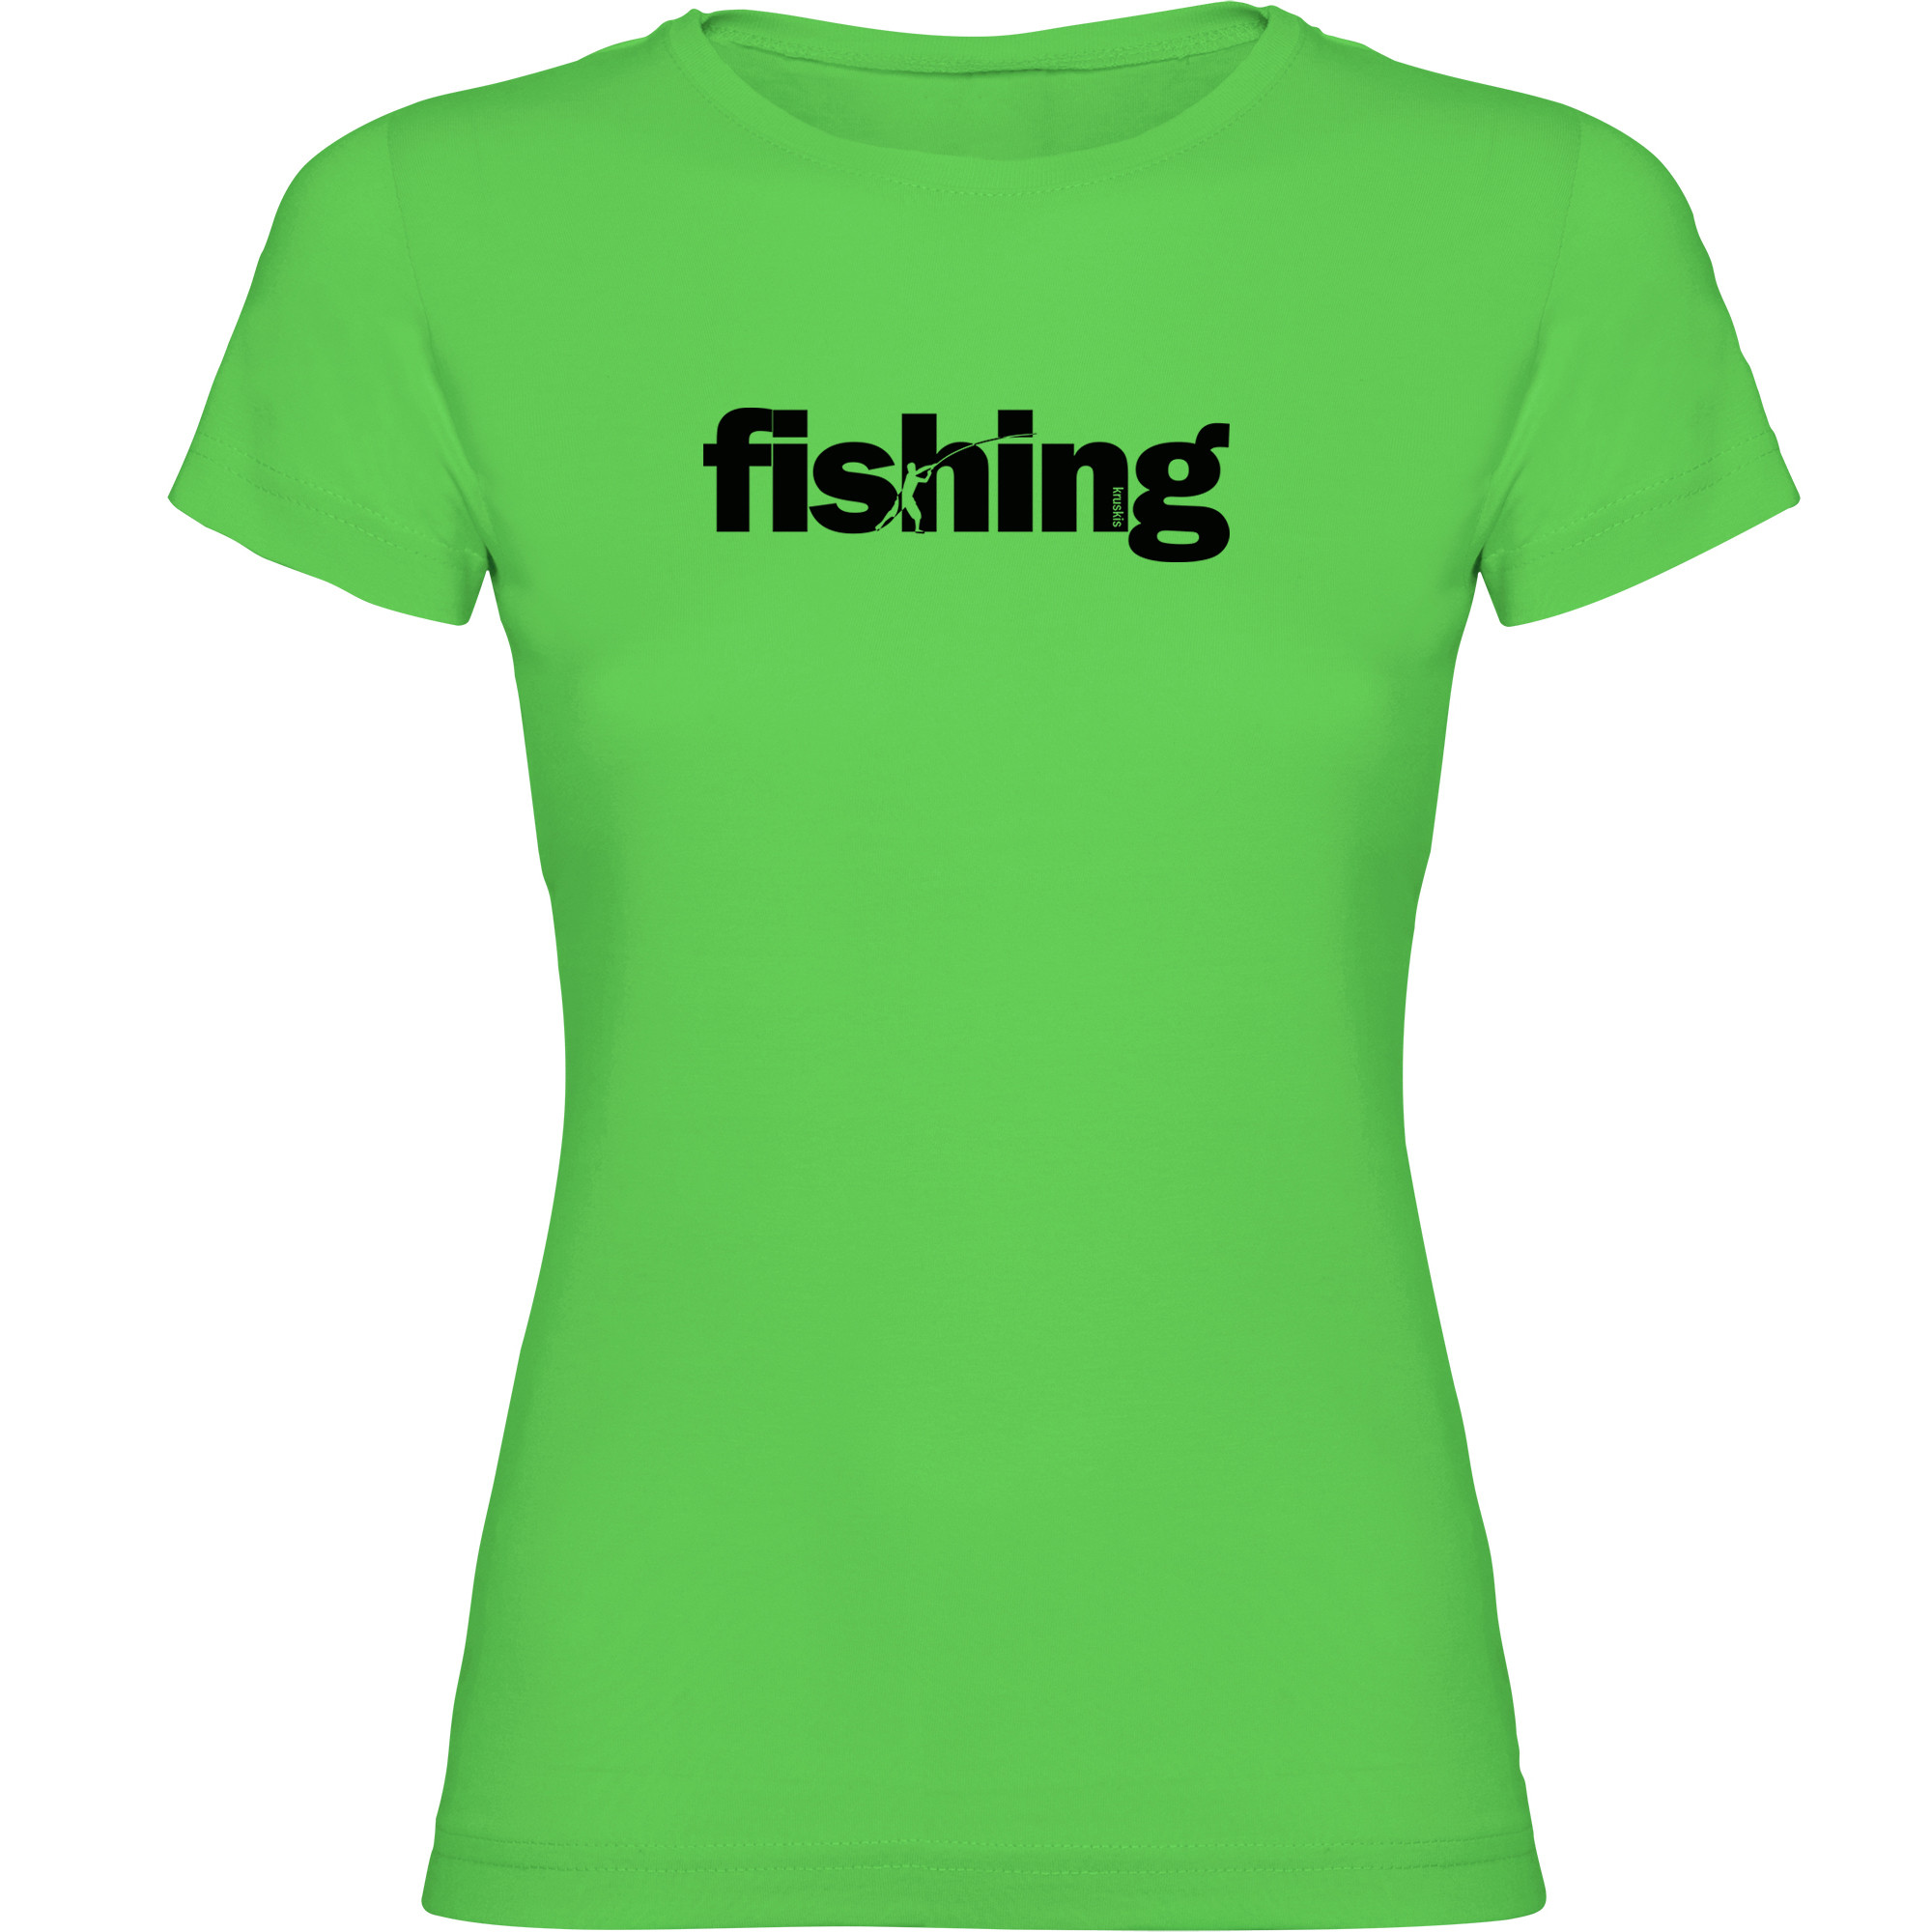 T Shirt Wedkarstwo Word Fishing Krotki Rekaw Kobieta